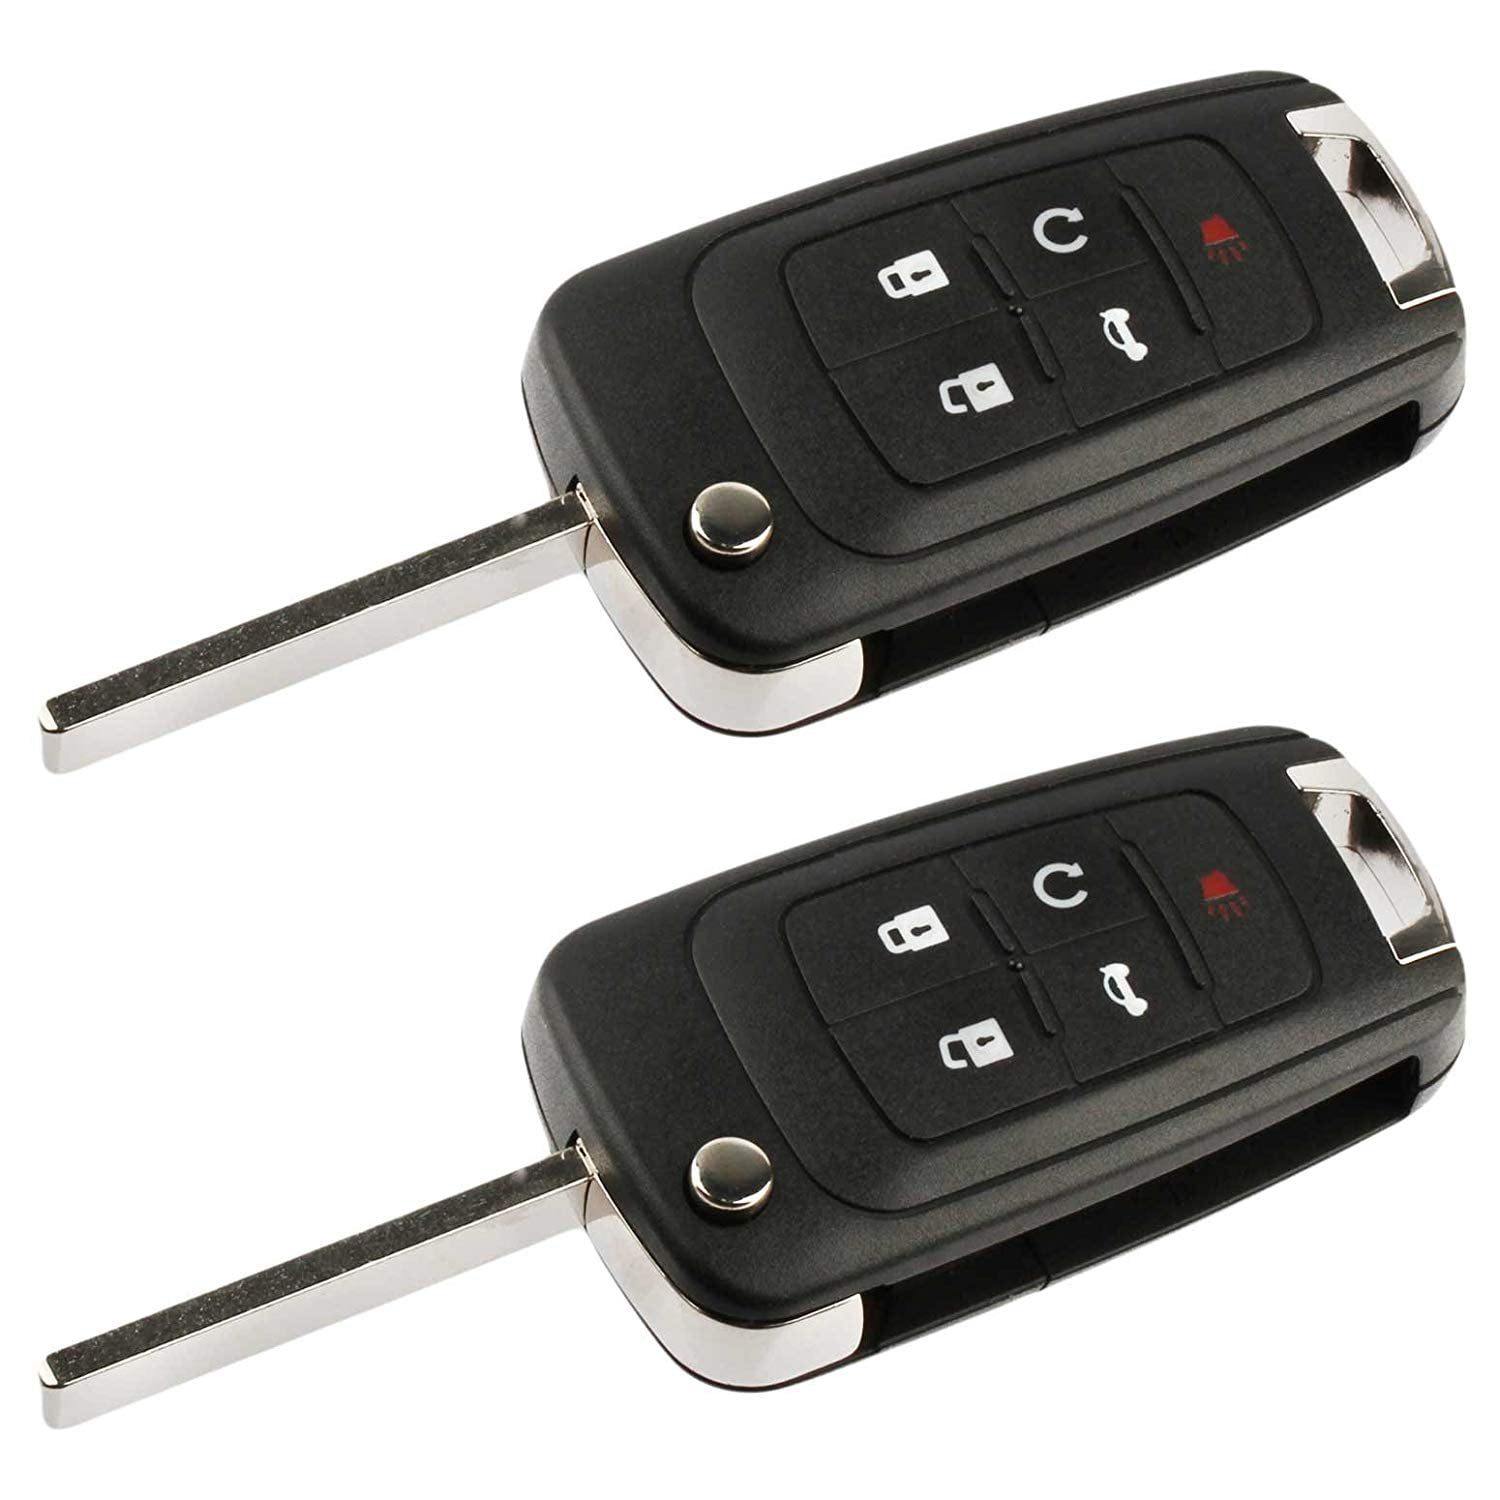 1 Pack Replacement for New Keyless Remote 4 Button Flip Car Key Fob for 7 Buick Allure Encore Lacrosse Regal Verano Chevy Camaro Cruze Equinox Impala Malibu Sonic GMC Terrain OHT01060512 315mhz 